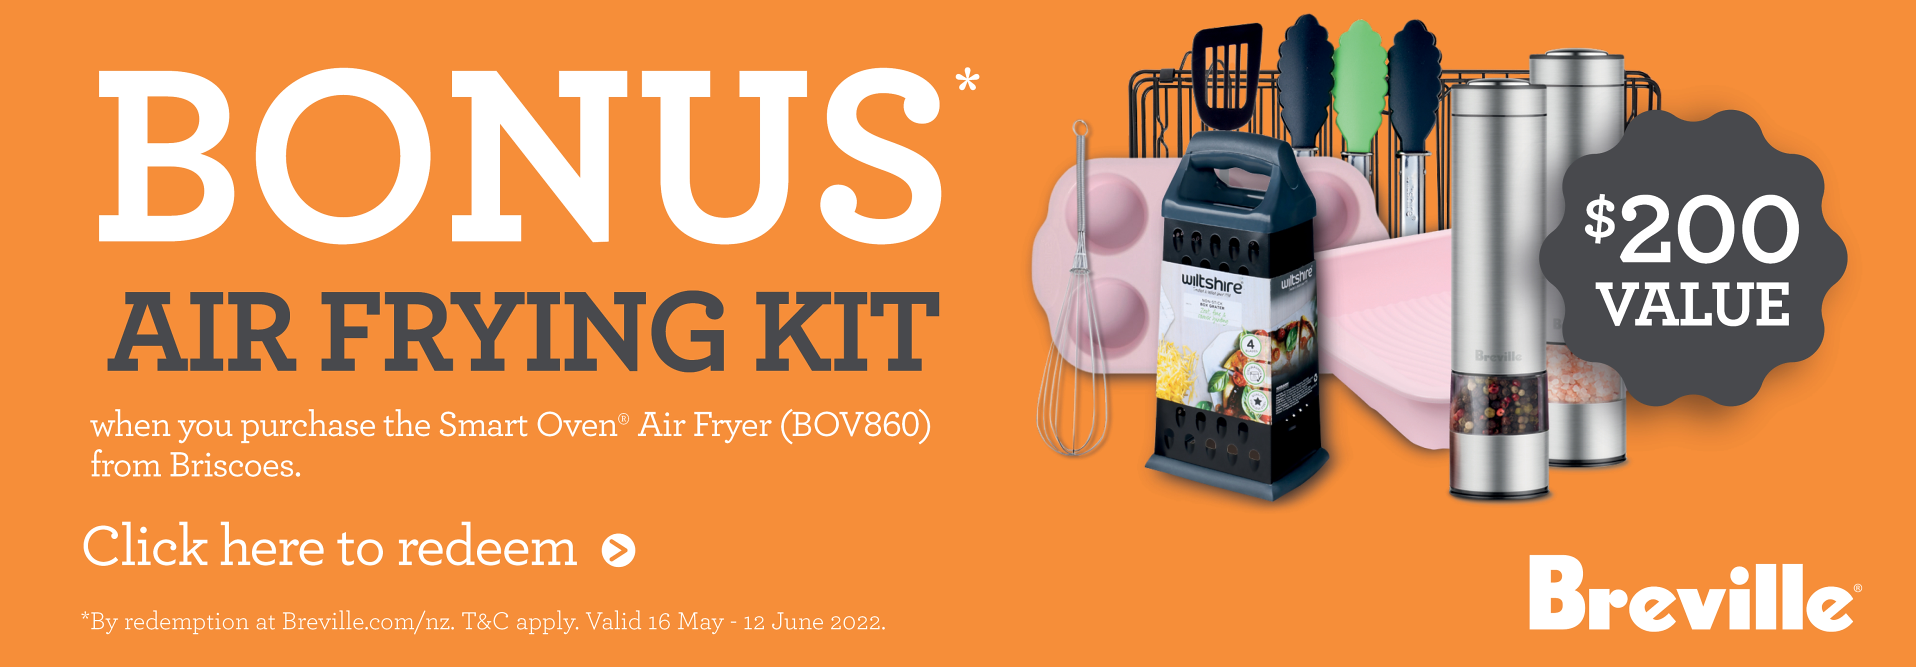 Bonus Air Frying Kit